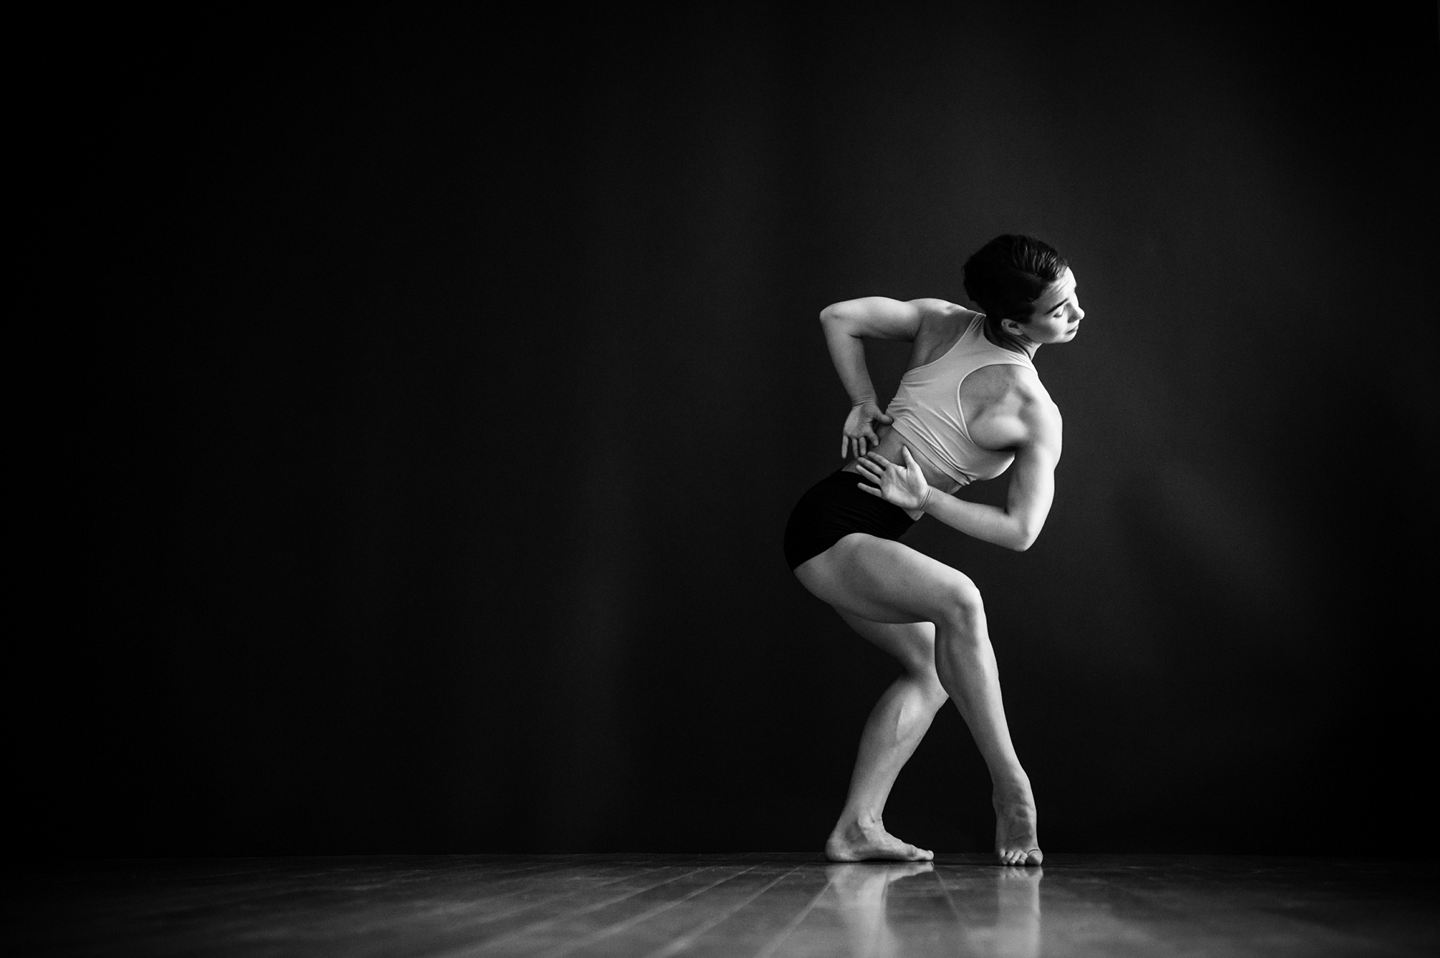 Los Angeles Dance Portrait Photo - Olga Sokolova - by Tommy Xing Photography 07.JPG